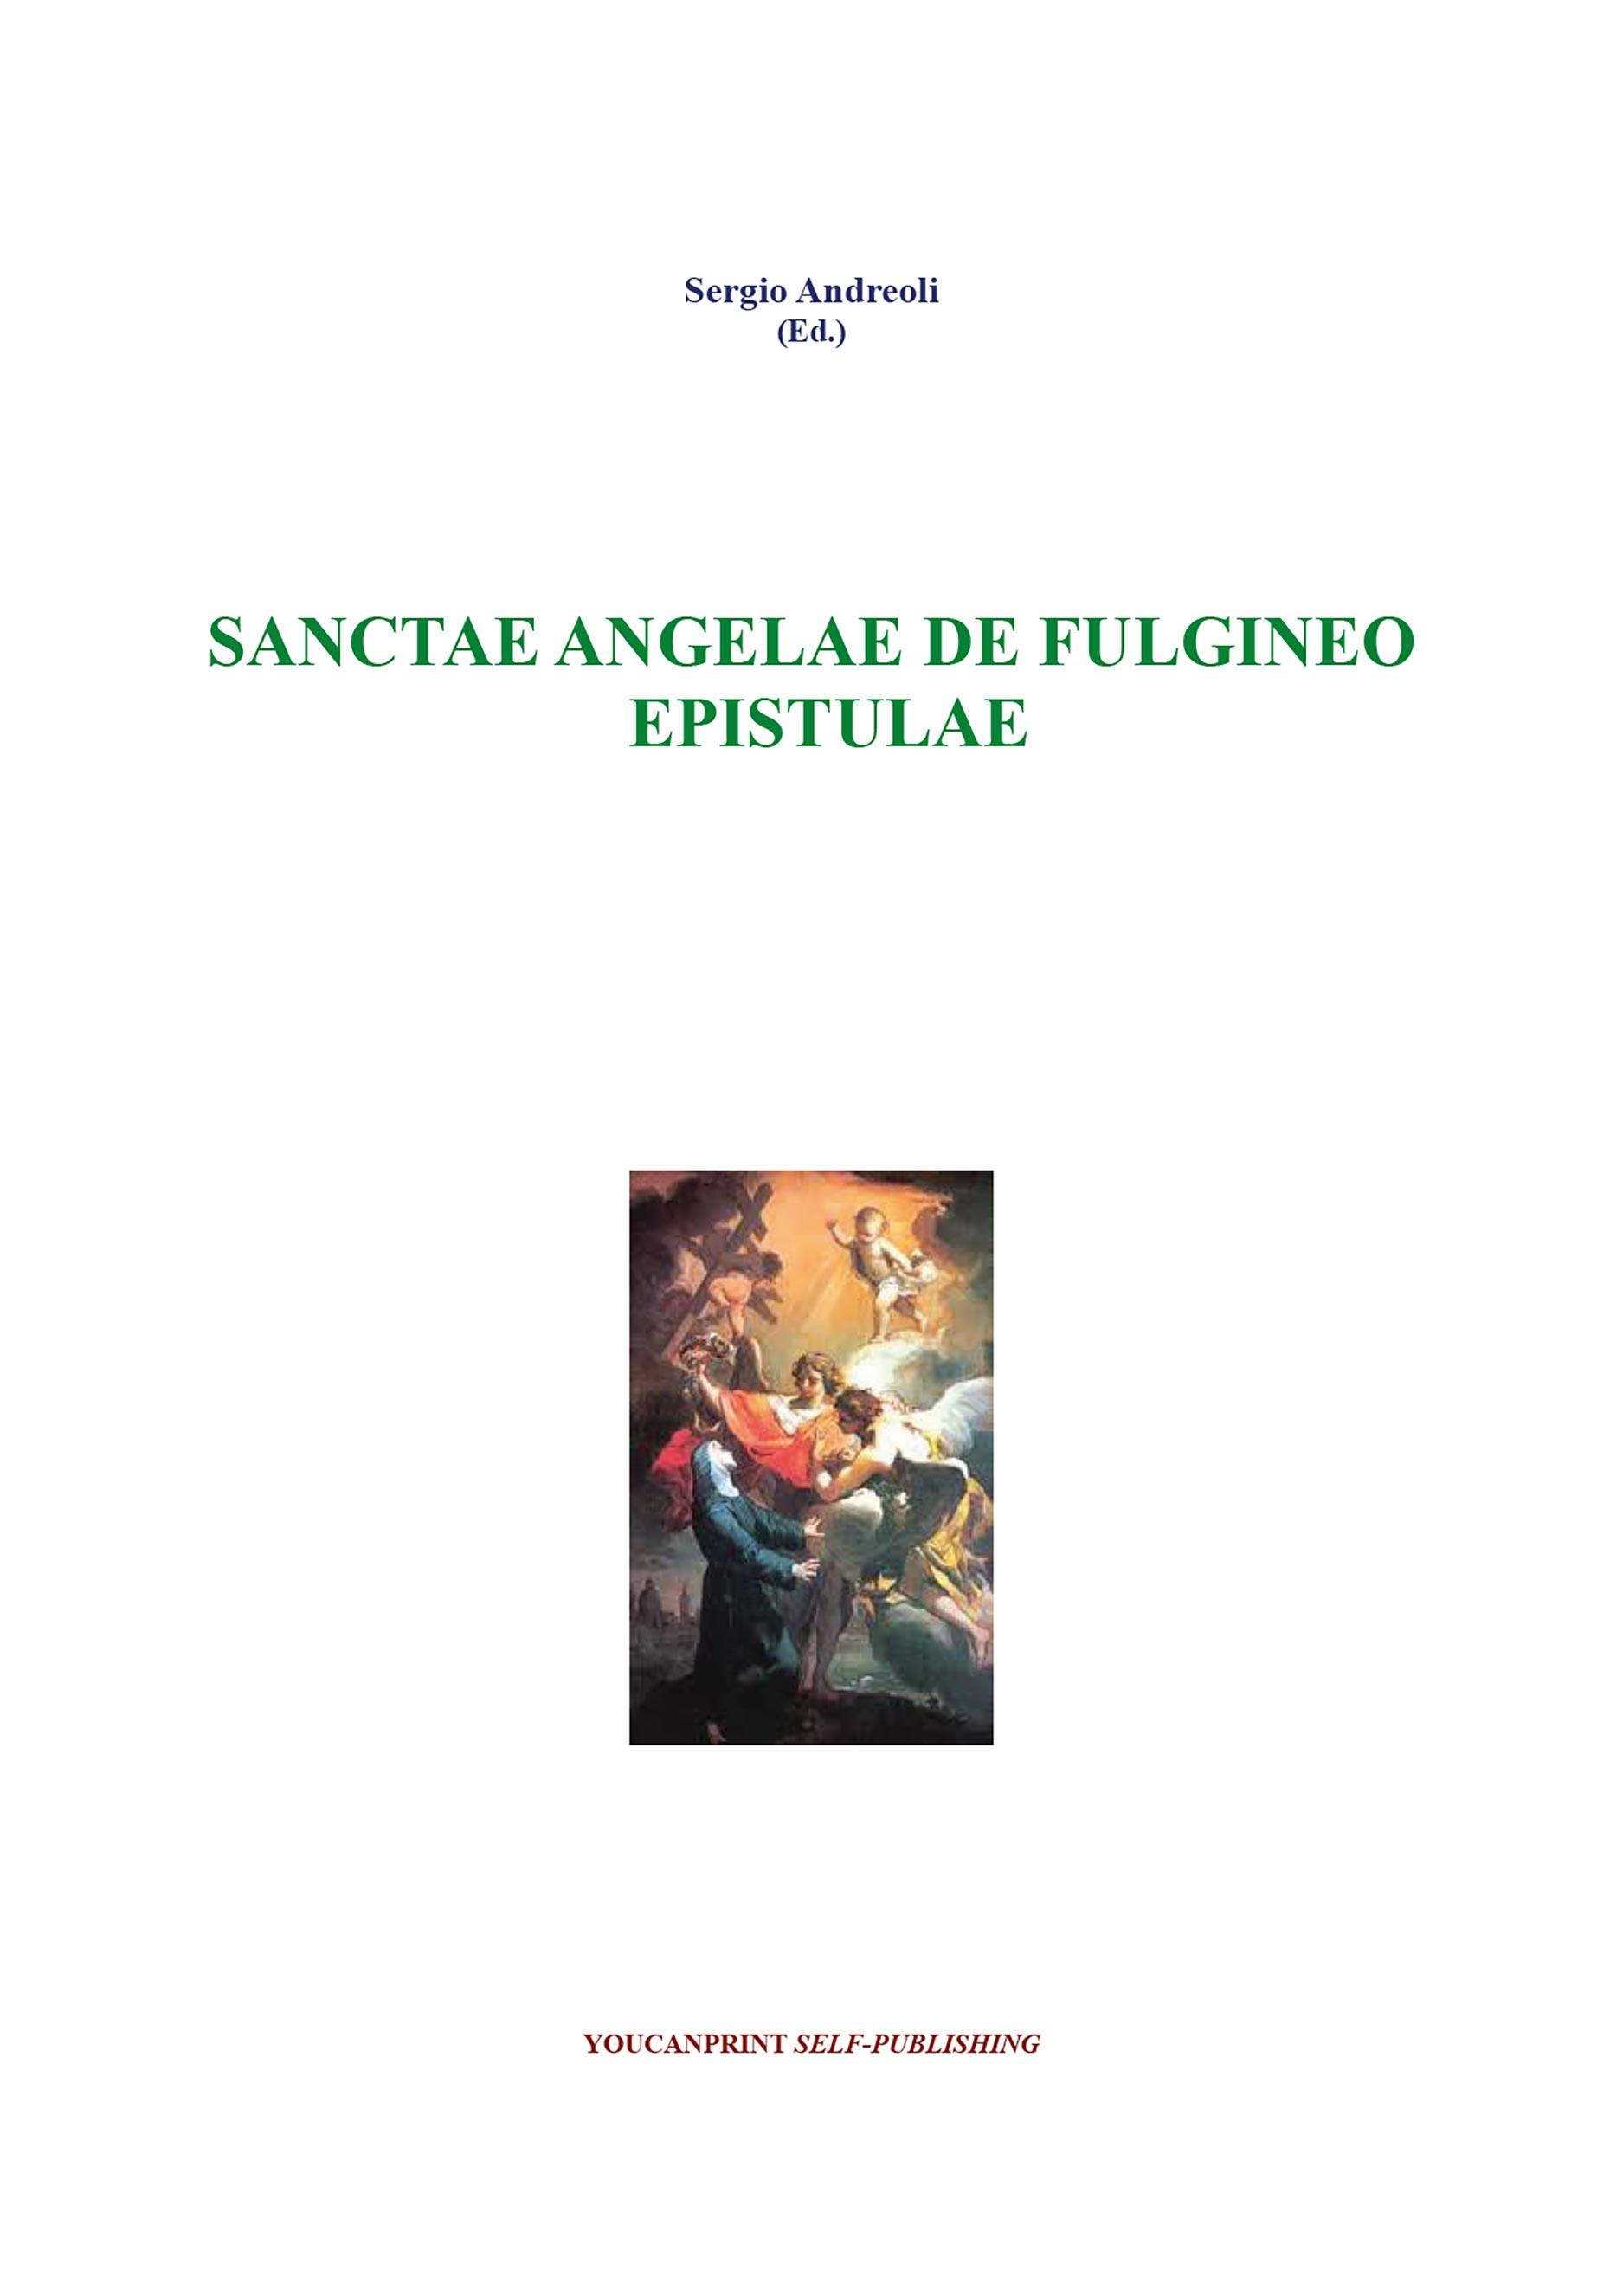 Sanctae Angelae de Fulgineo - Epistulae